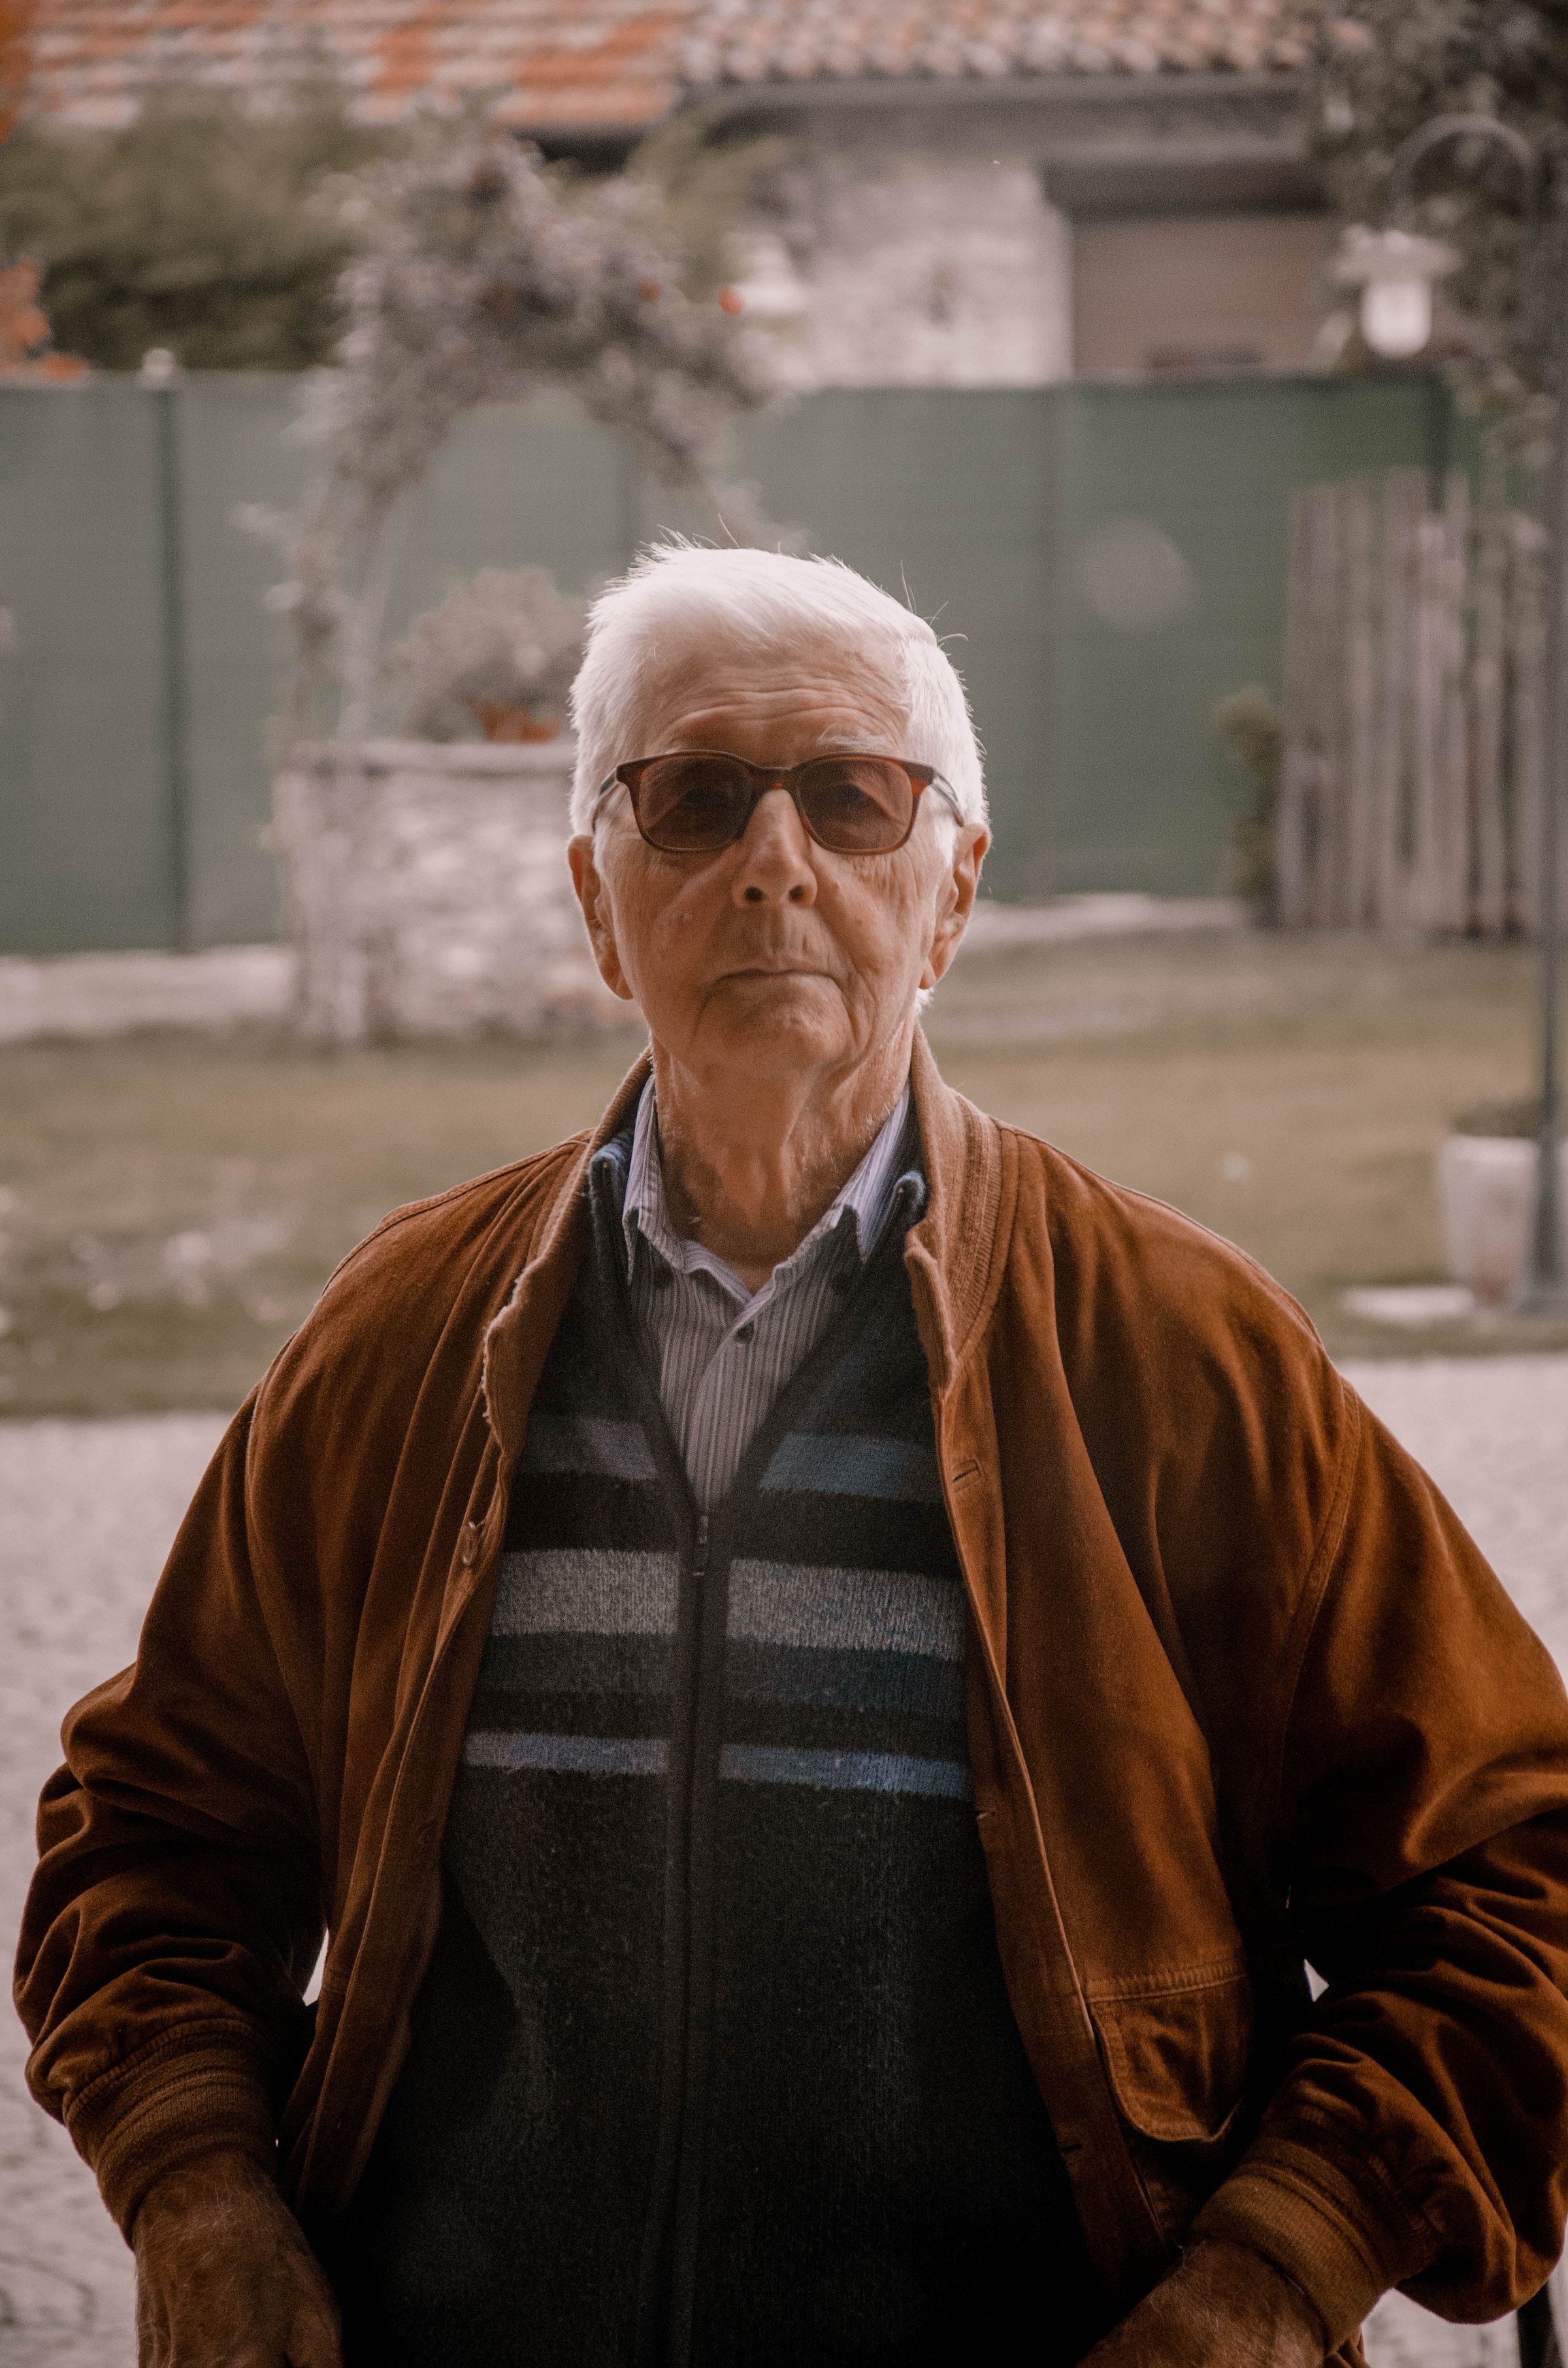 An elderly man in a brown jacket wearing sunglasses | Source: Unsplash